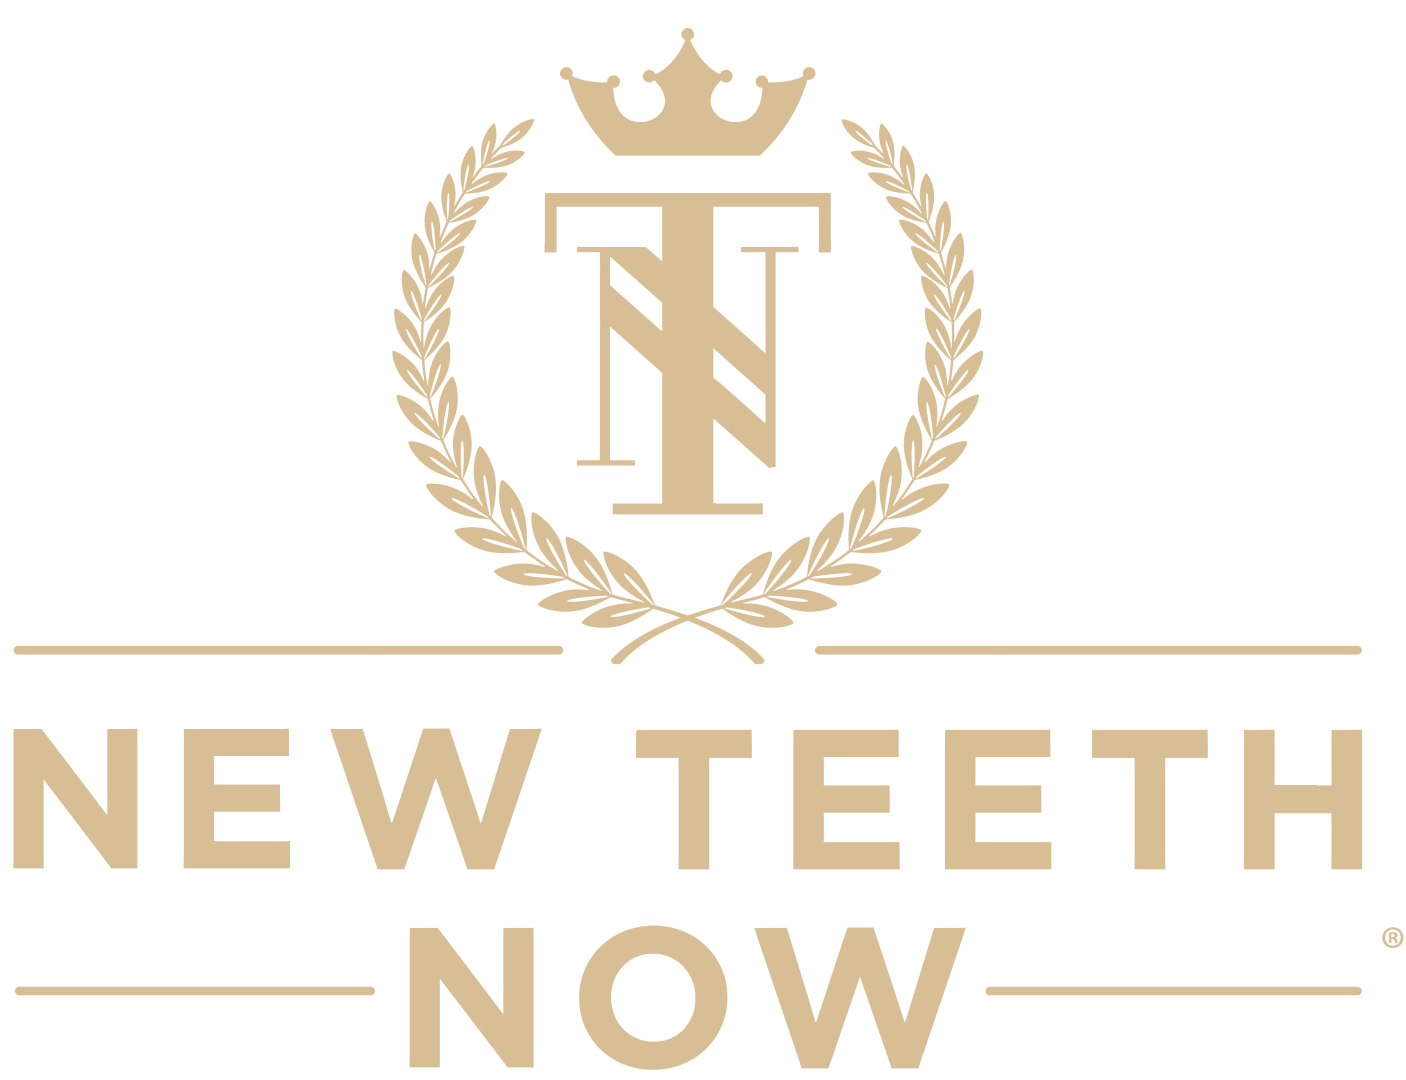 NewTeethNow logo